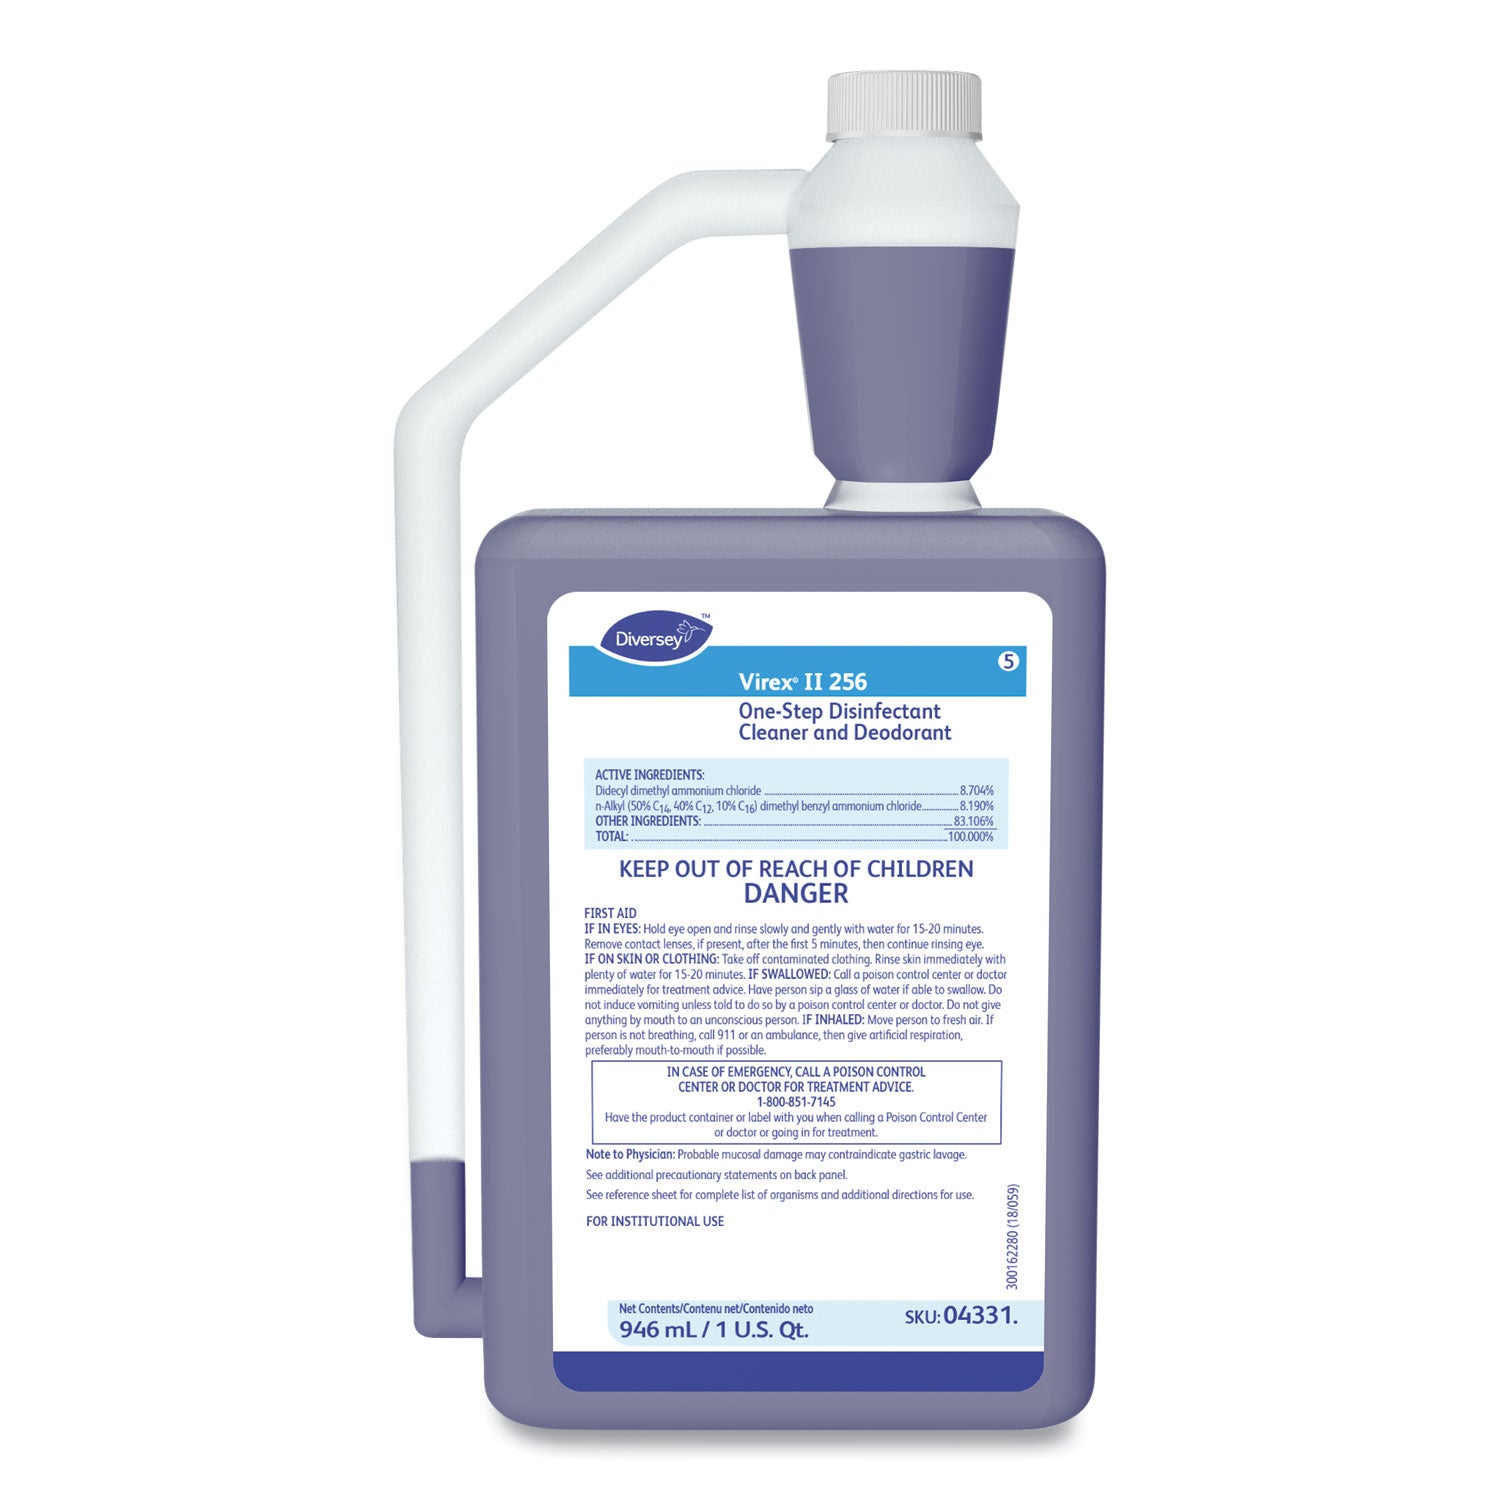 virex-ii-256-one-step-disinfectant-cleaner-deodorant-mint-32oz-bottle6-crtn_dvs04331 - 1